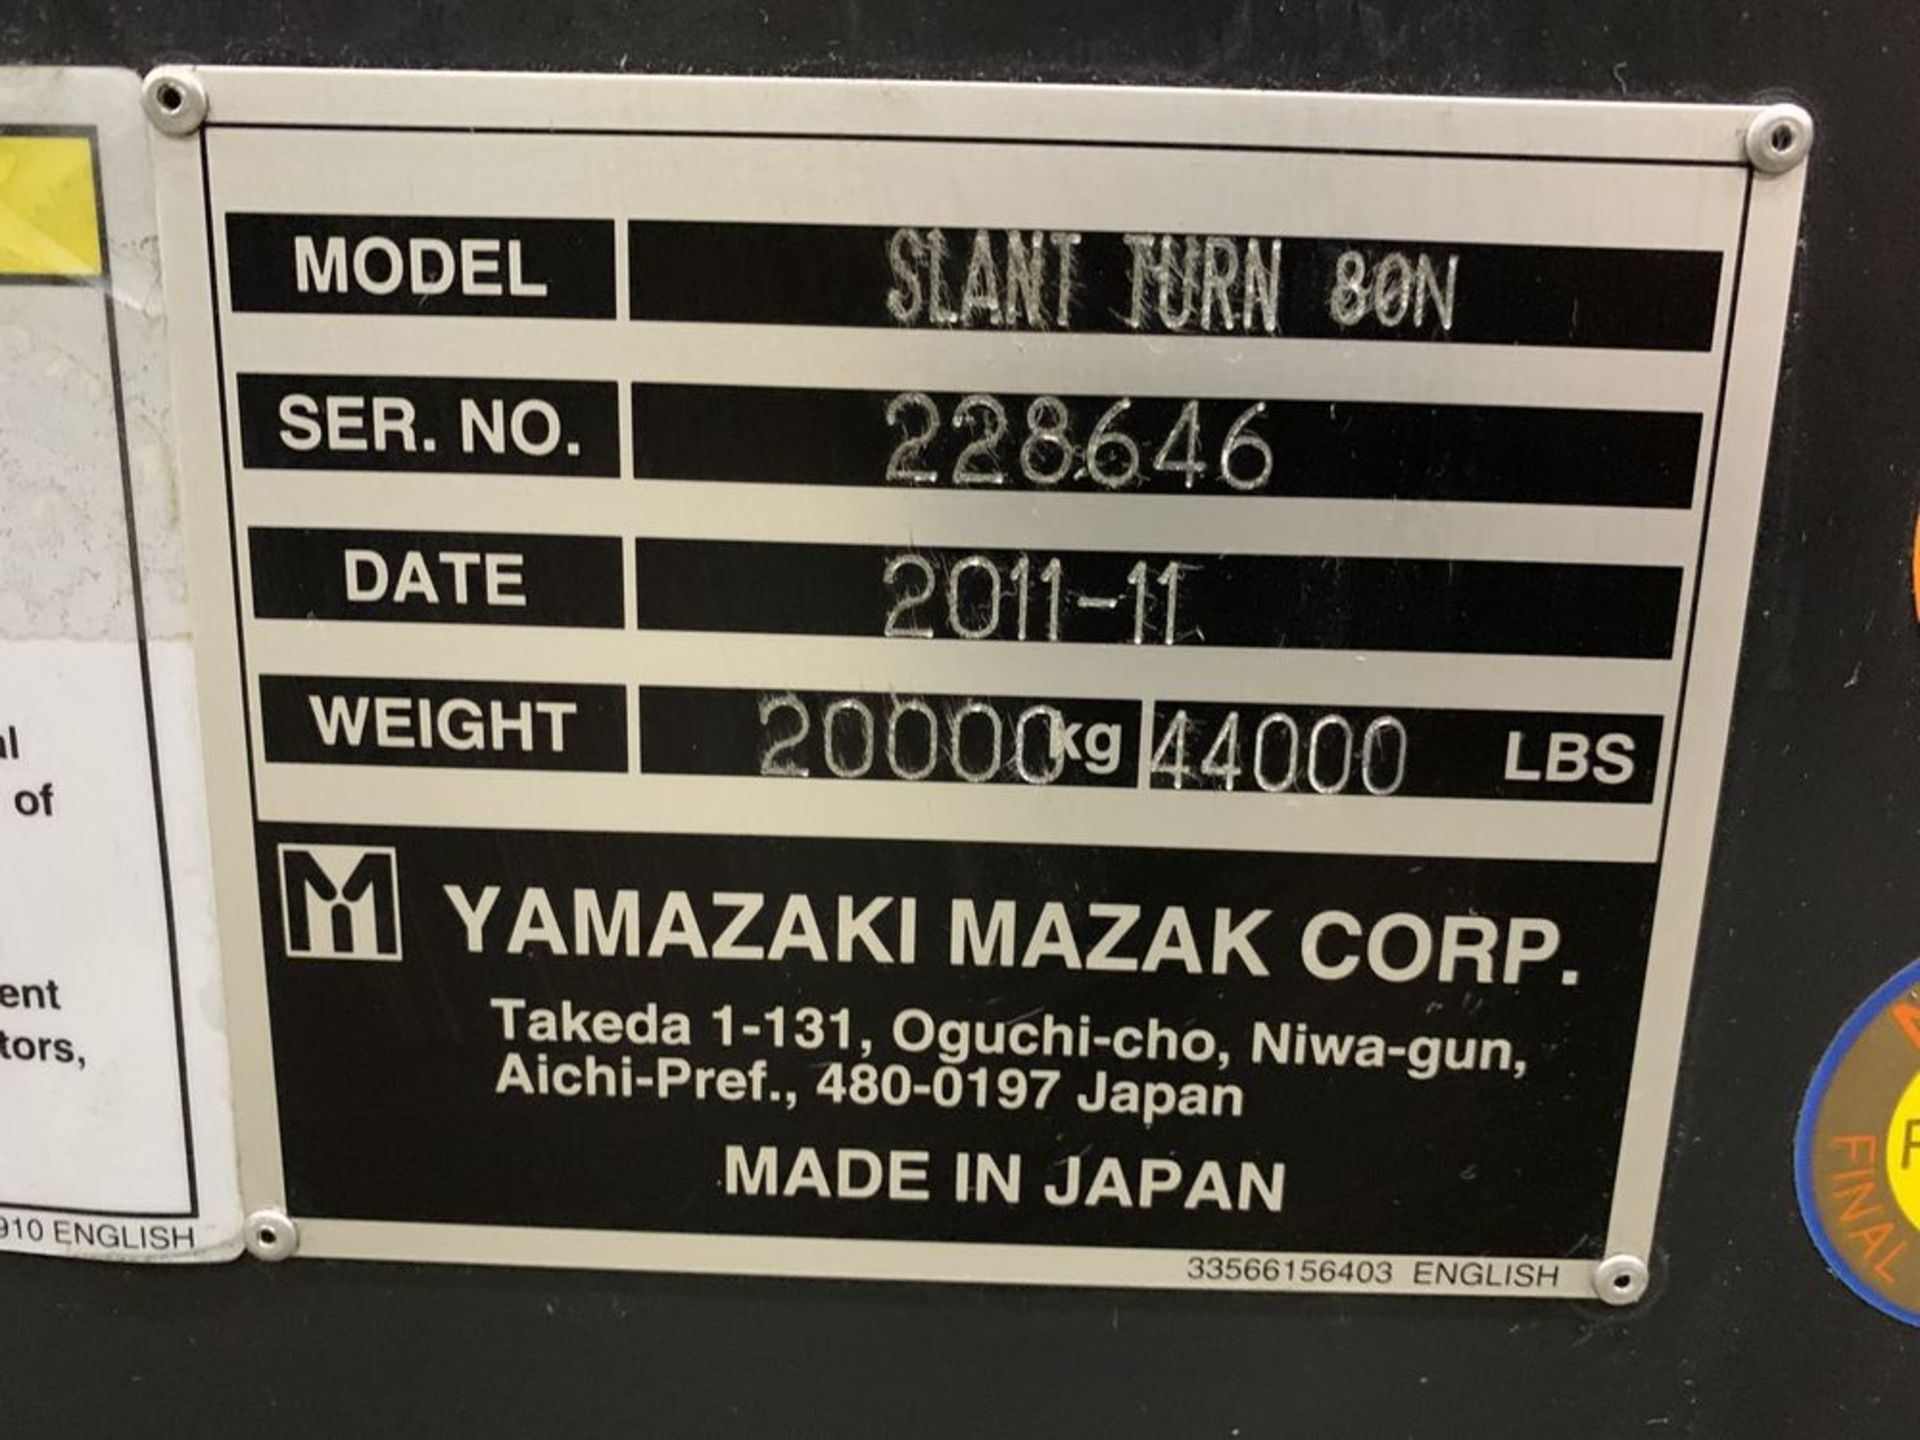 2011 MAZAK ST80 CNC Lathe, s/n 228646, Mazatrol 640T CNC Control - Image 10 of 12